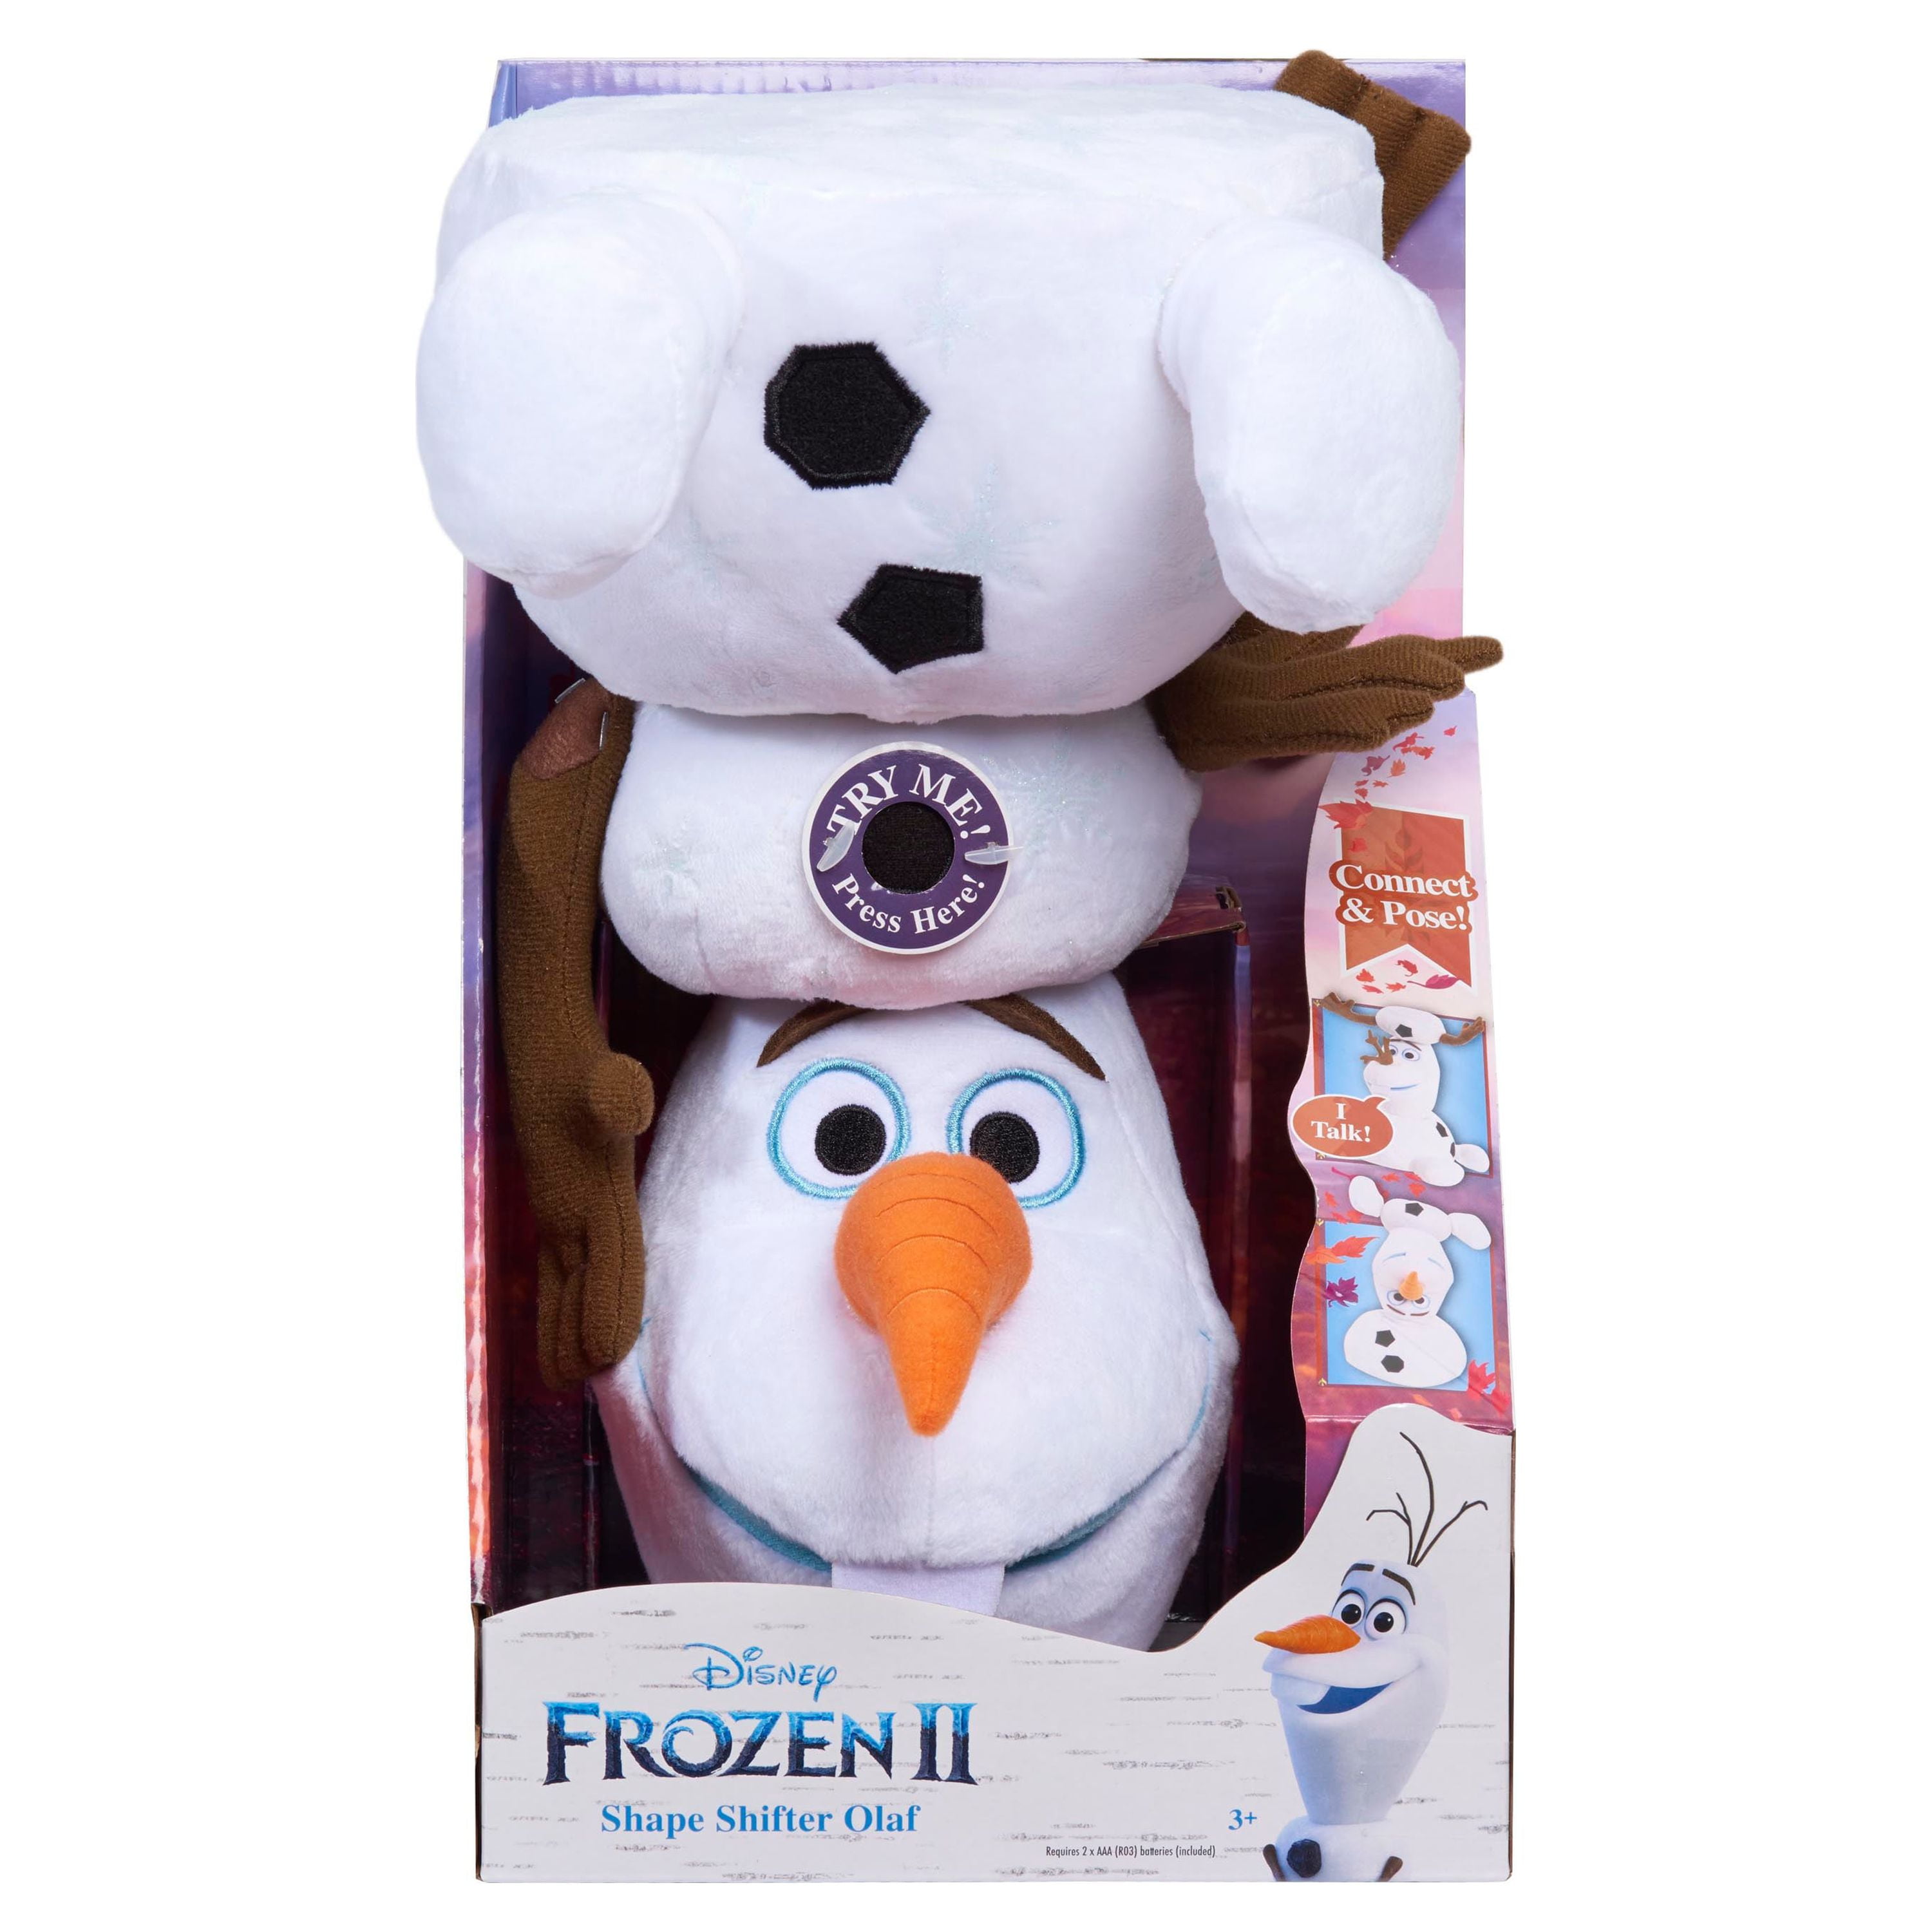 Disney Frozen Laugh Shake & Shimmy Olaf Stuffed Animal